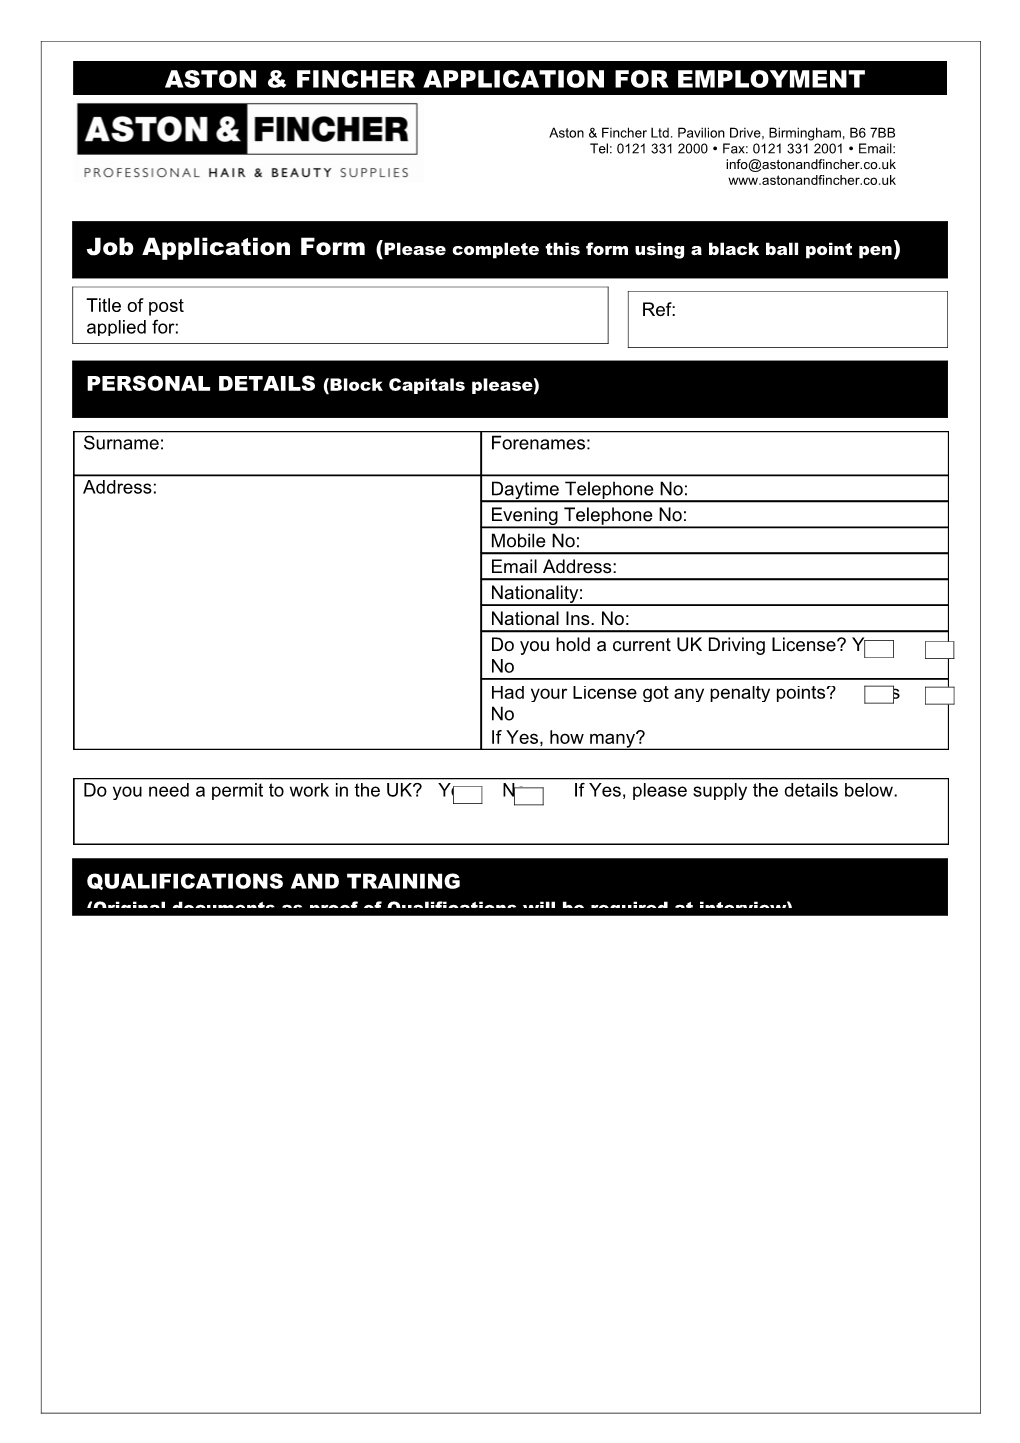 Aston & Fincher Application for Employment